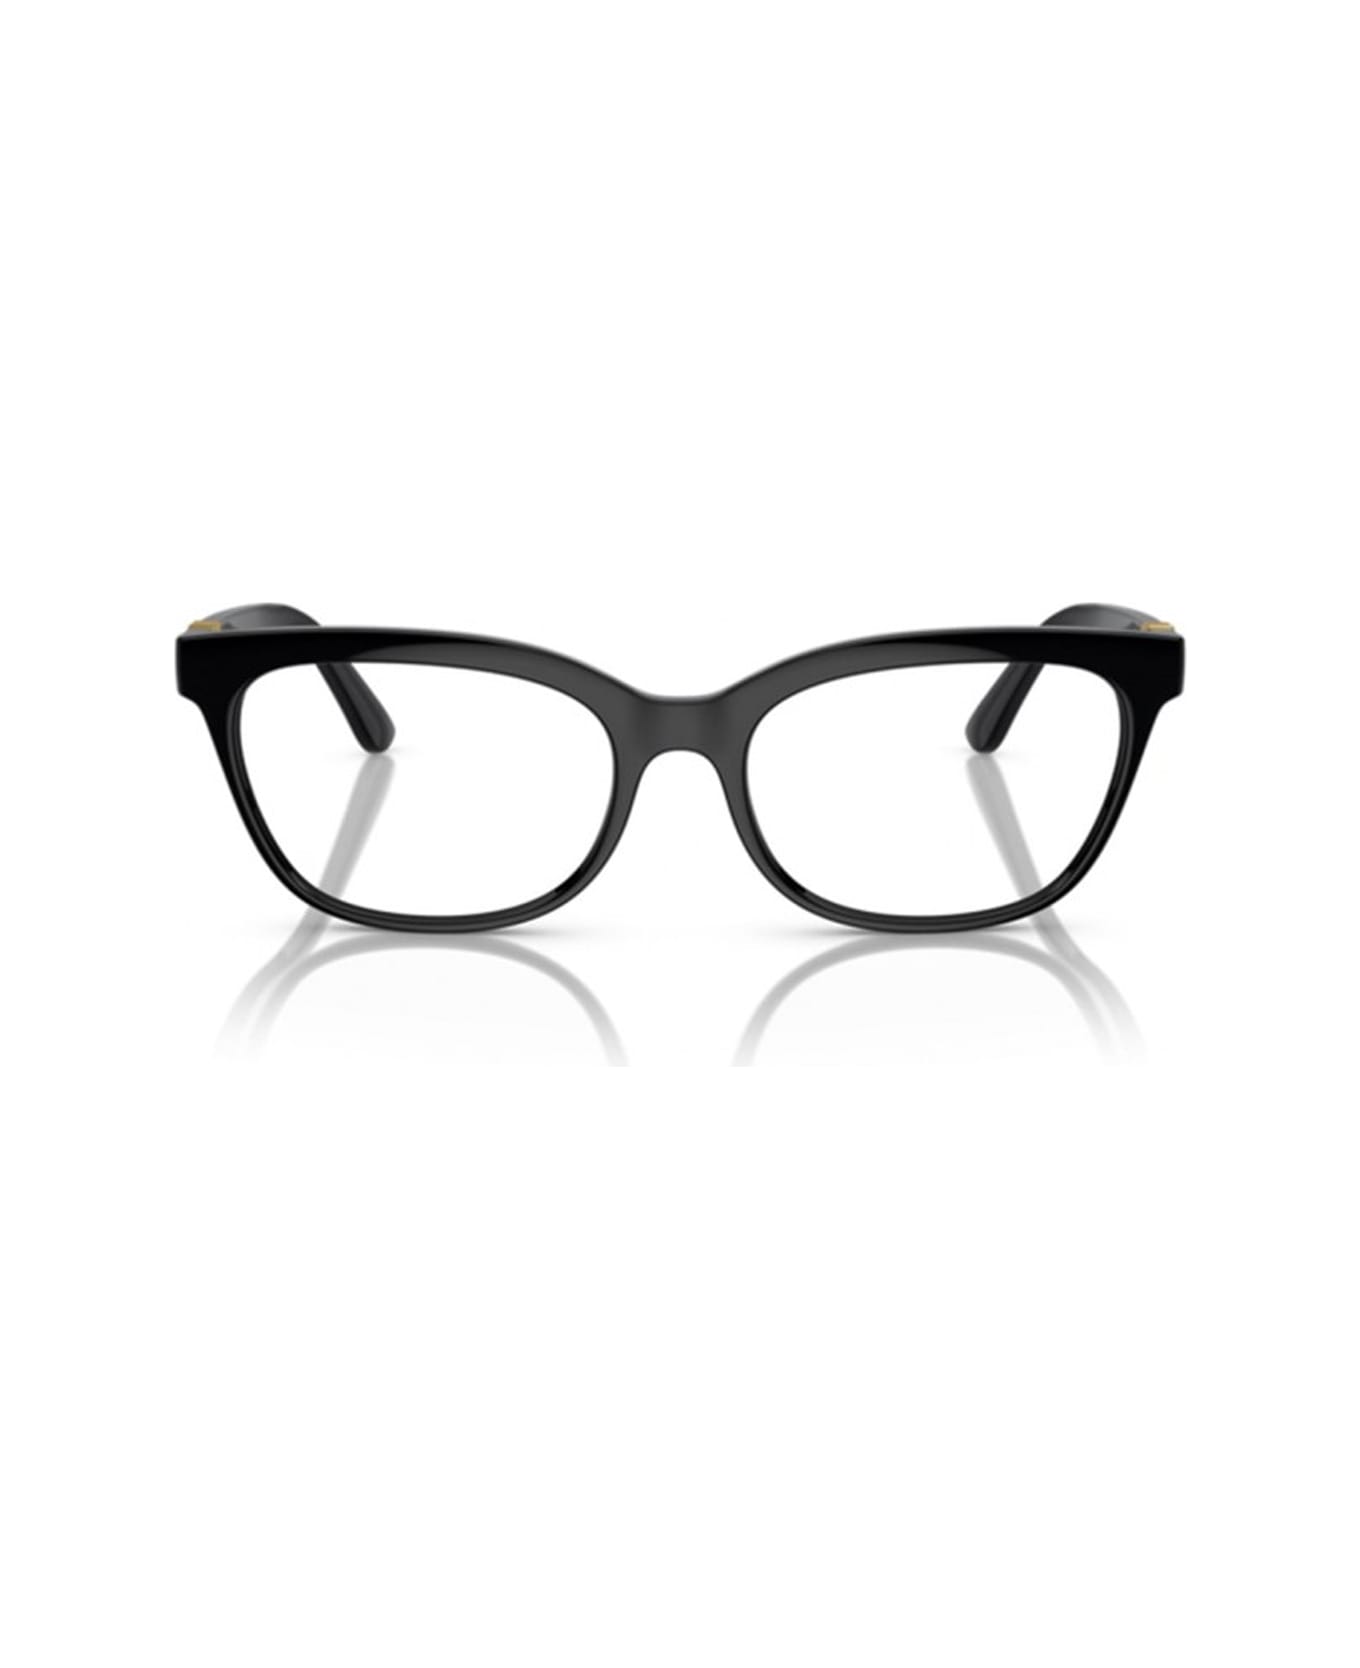 Dolce & Gabbana Eyewear Dg5106u 501 Glasses - Nero